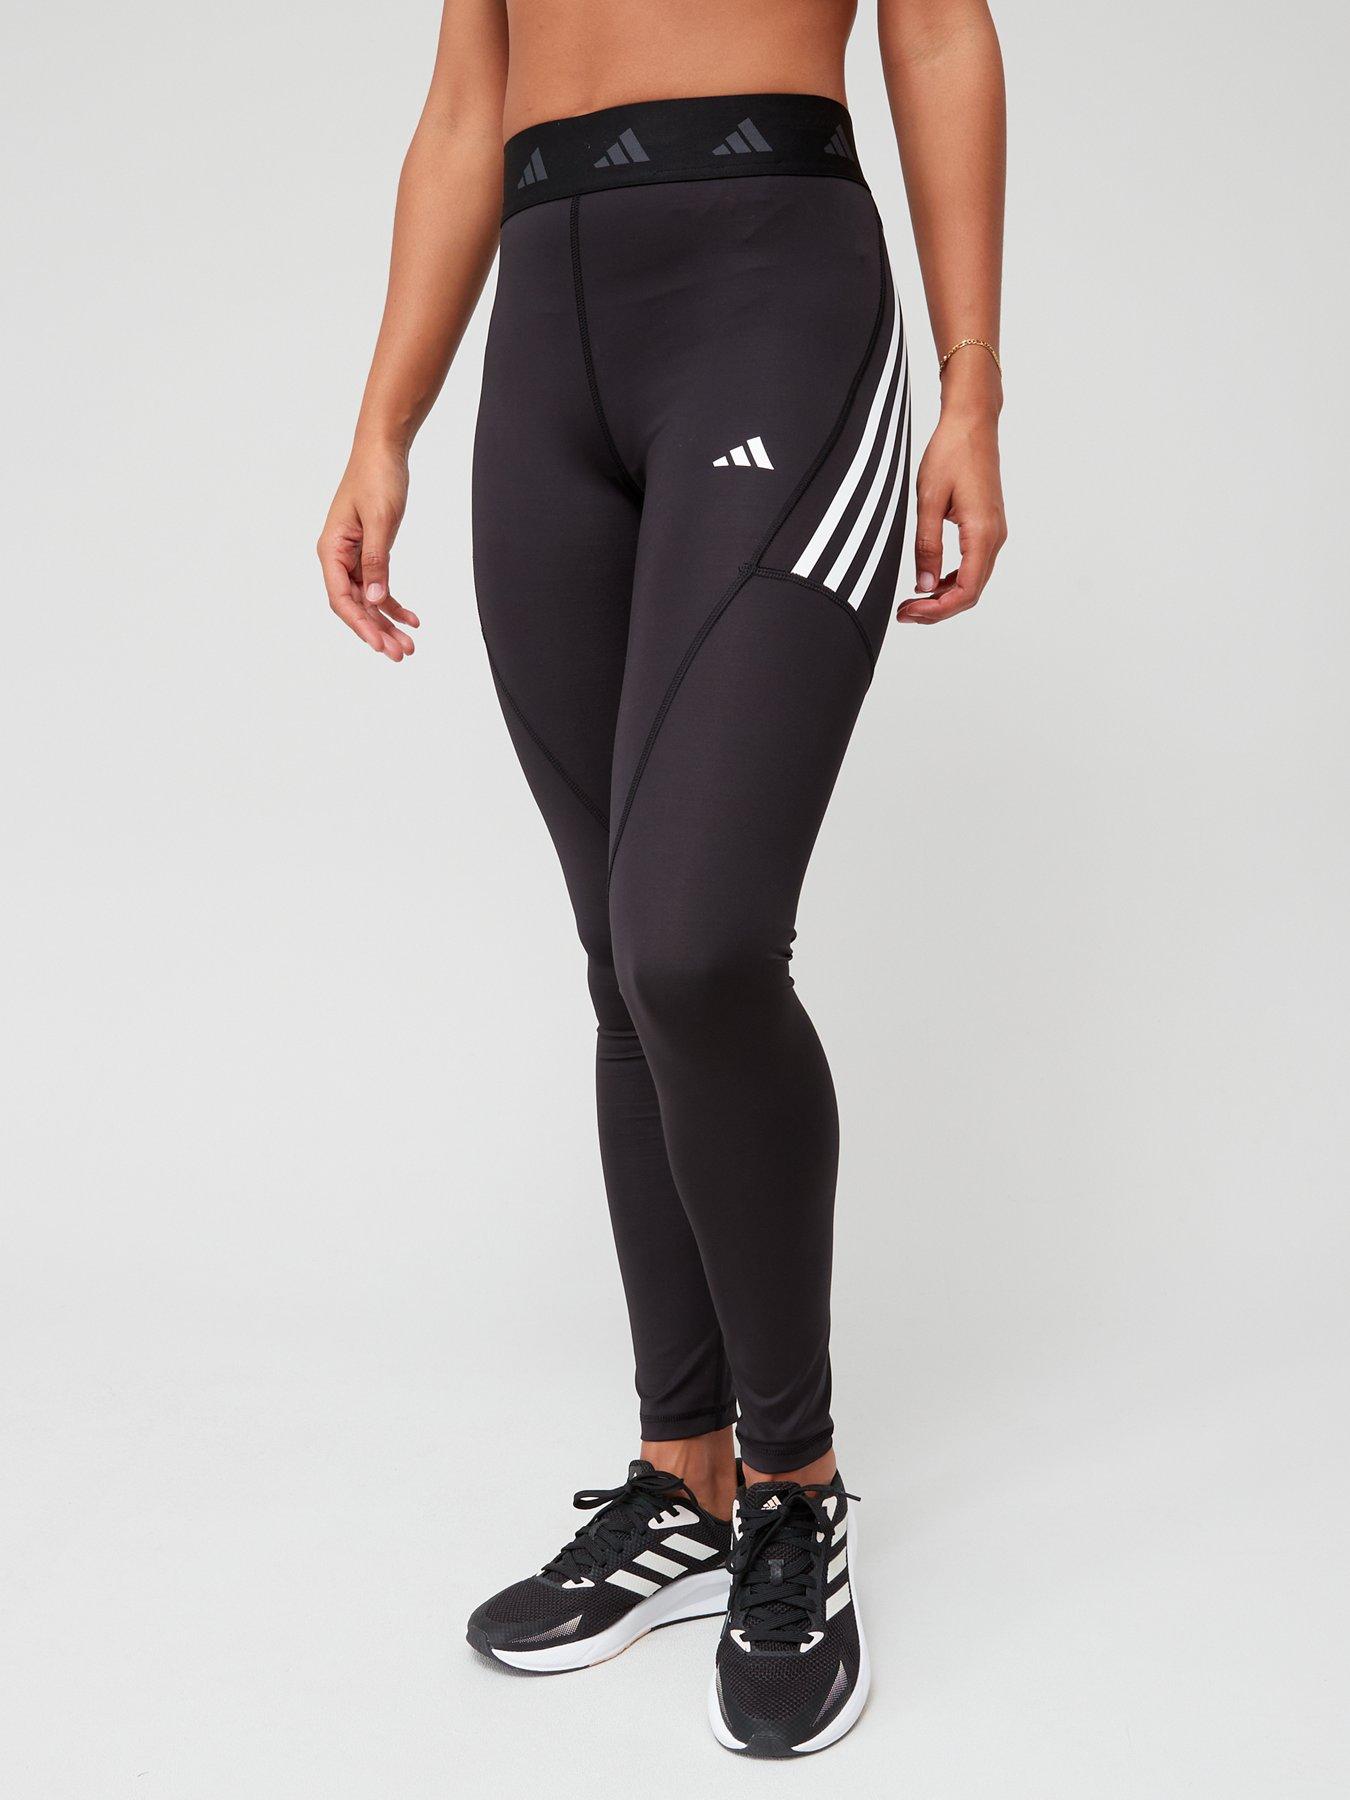 Adidas Alphaskin Long Tights Womens - Black